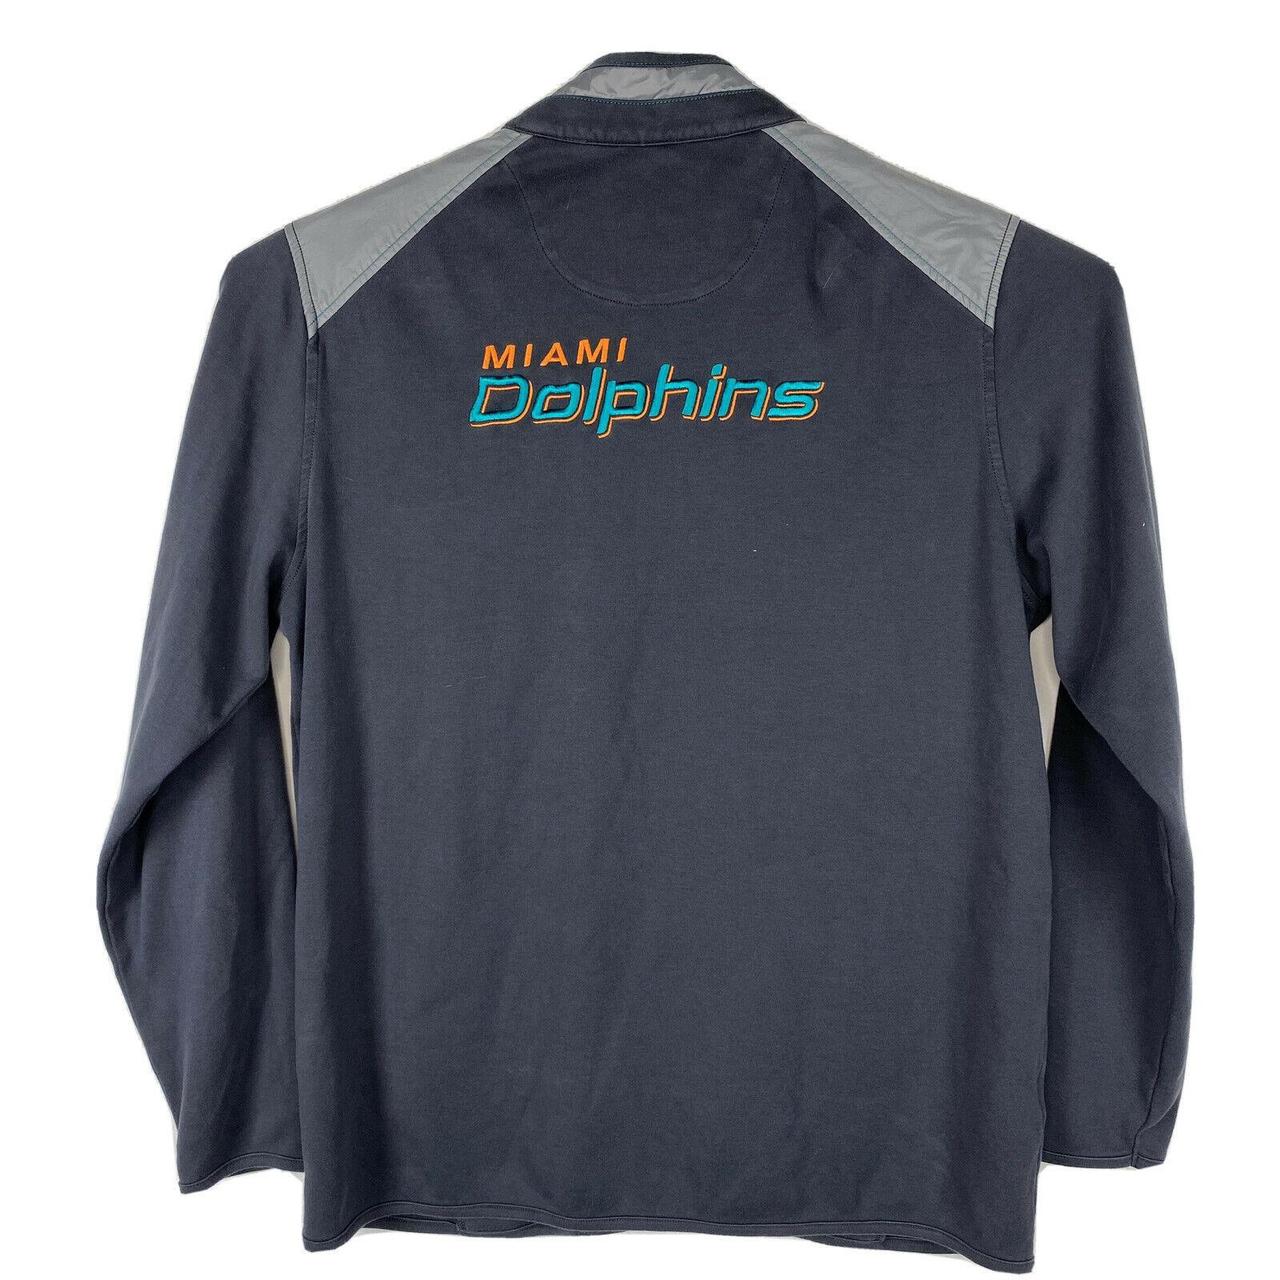 tommy bahama dolphins shirt